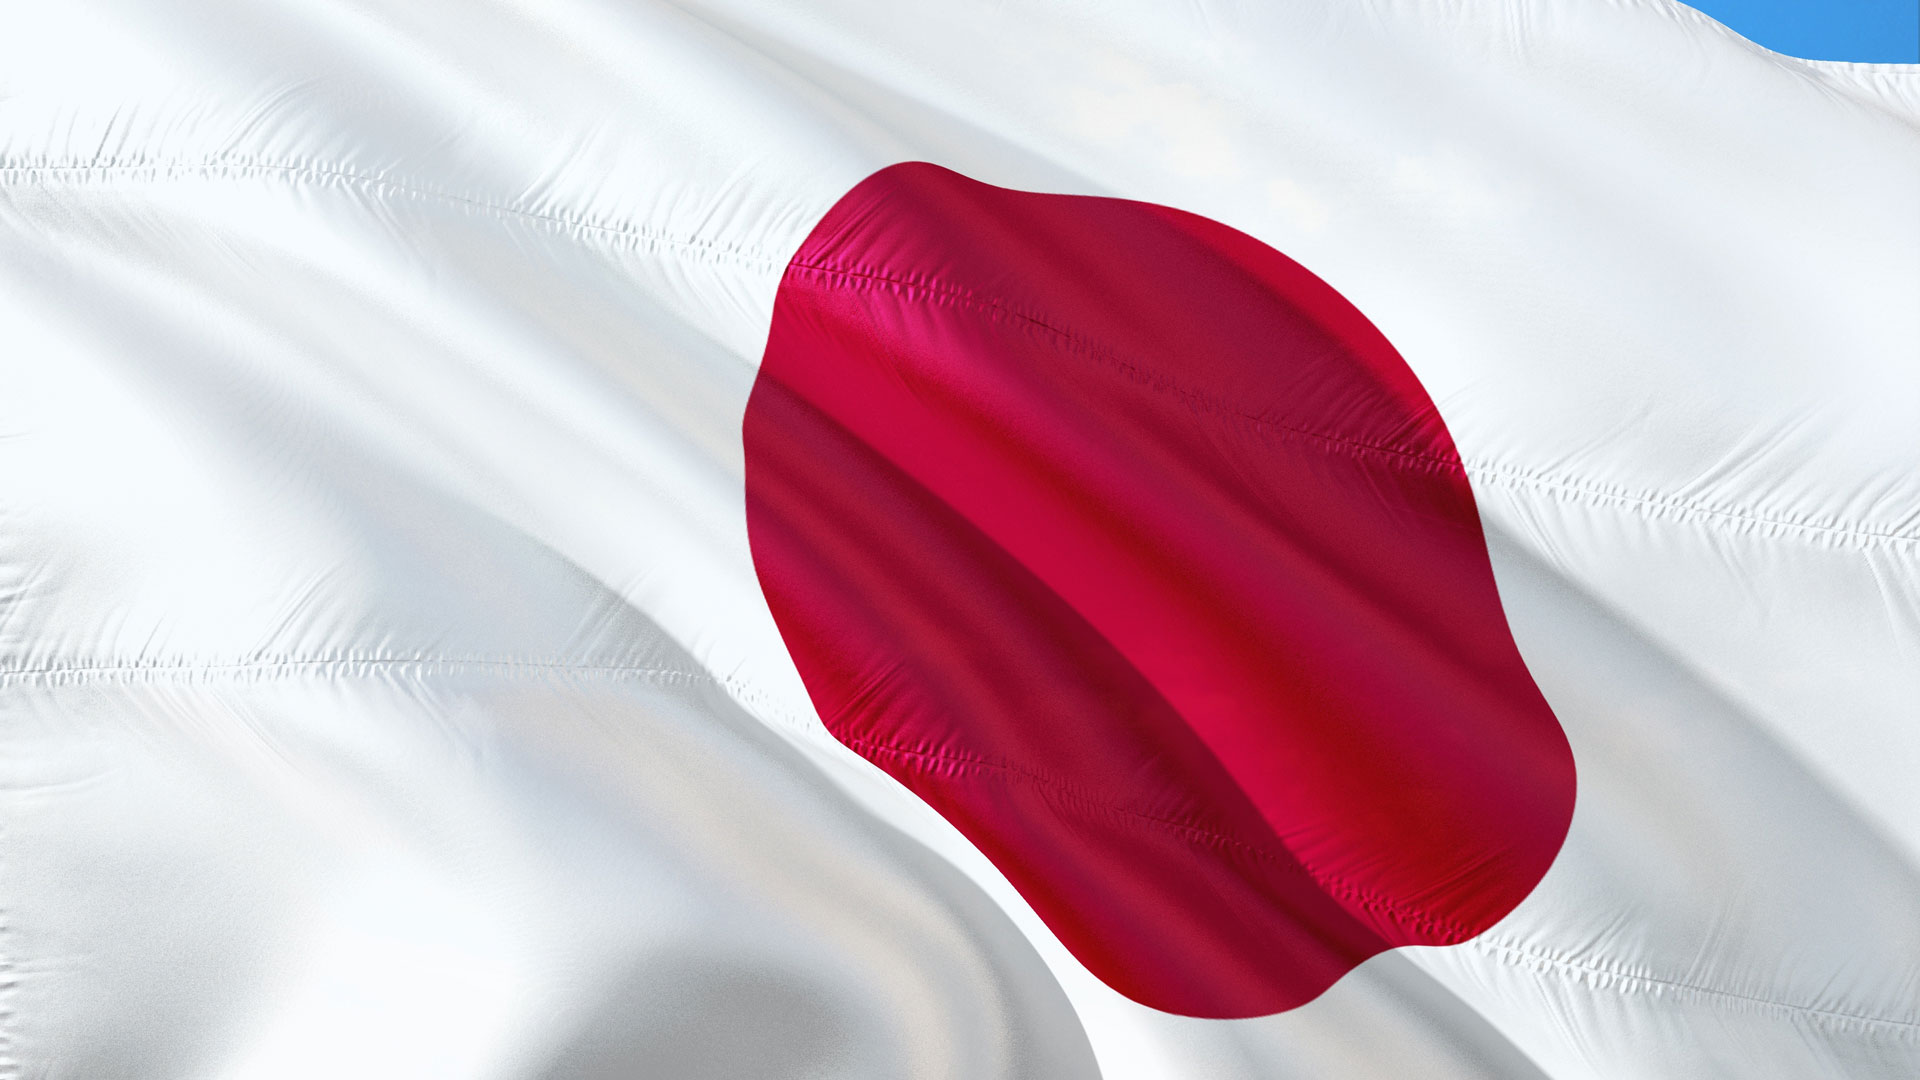 Flagge Japan | Bildquelle: Pixabay